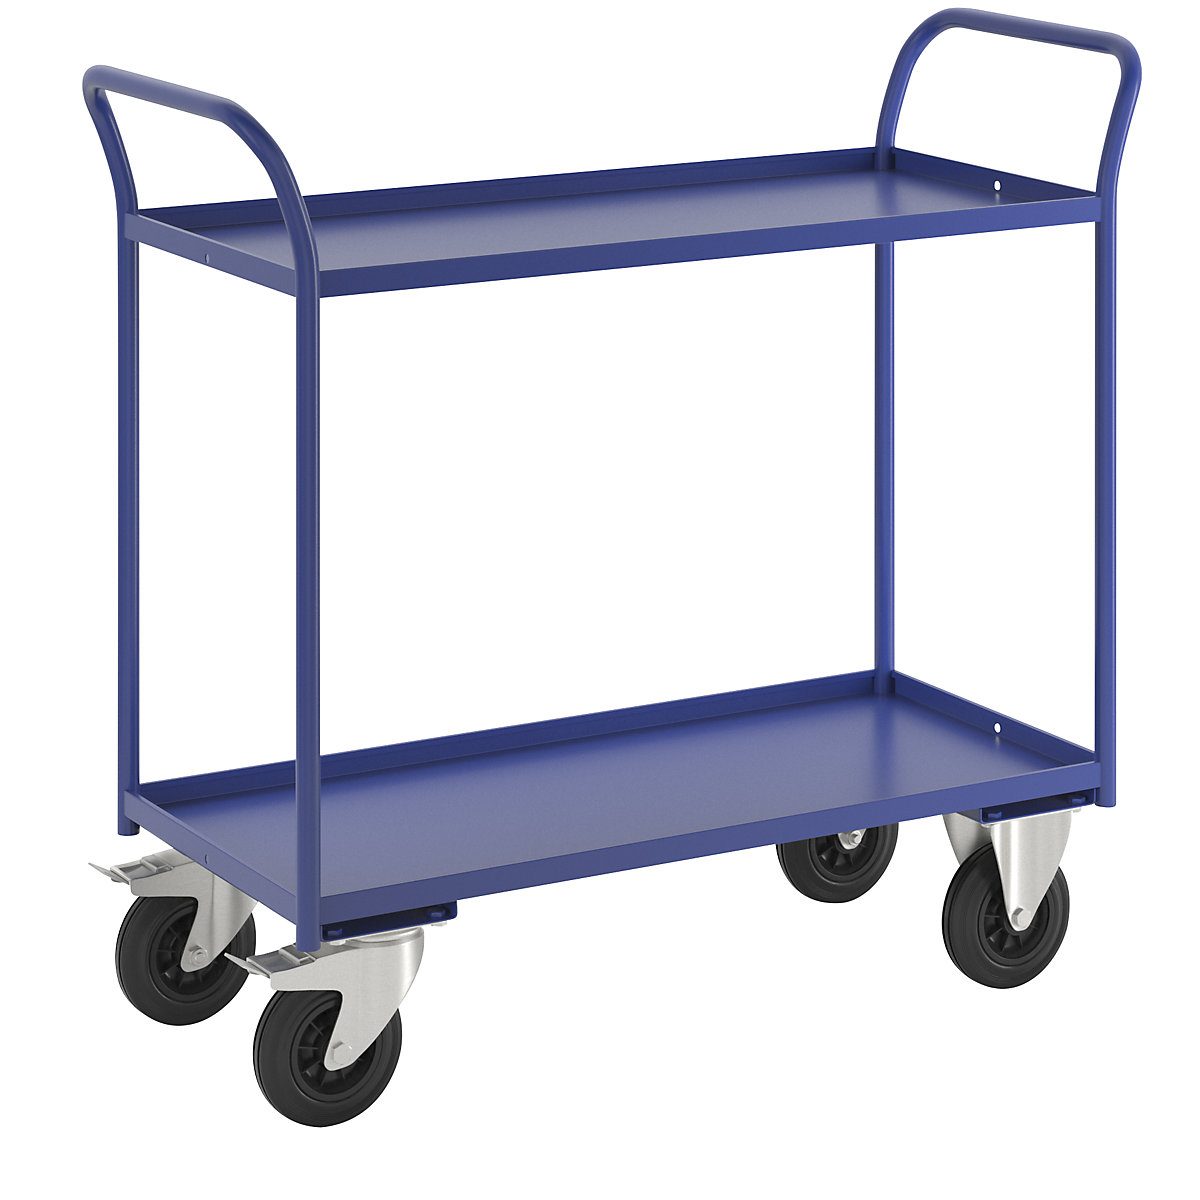 KM41 table trolley – Kongamek, 2 shelves with raised edges, LxWxH 1080 x 450 x 1000 mm, blue, 2 swivel castors with stops, 2 fixed castors-8